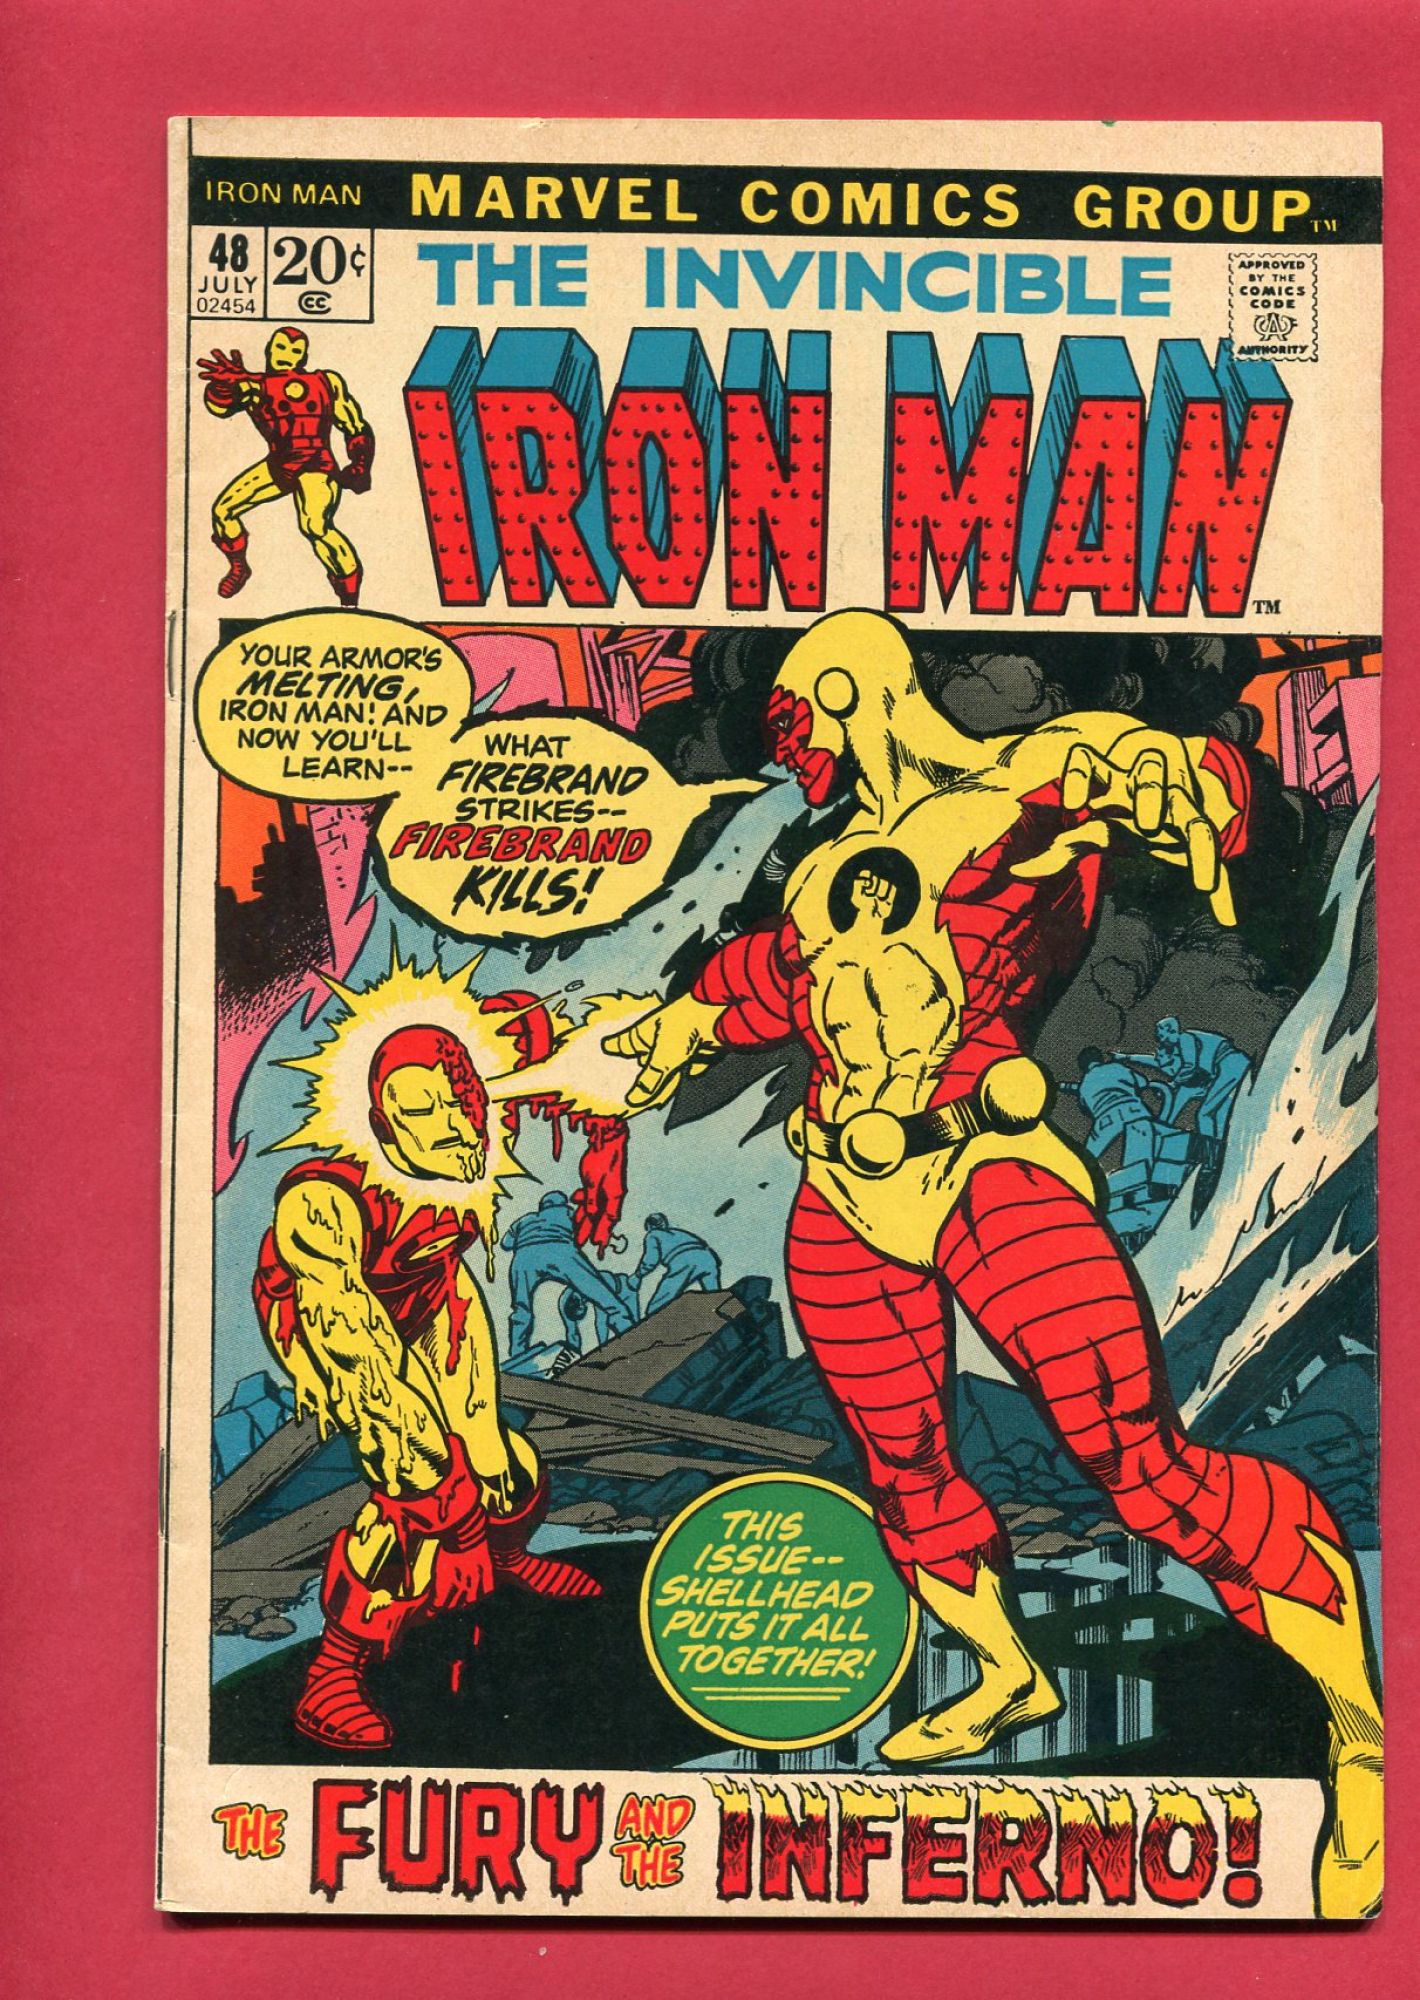 Iron Man #48, Jul 1972, 7.0 FN/VF